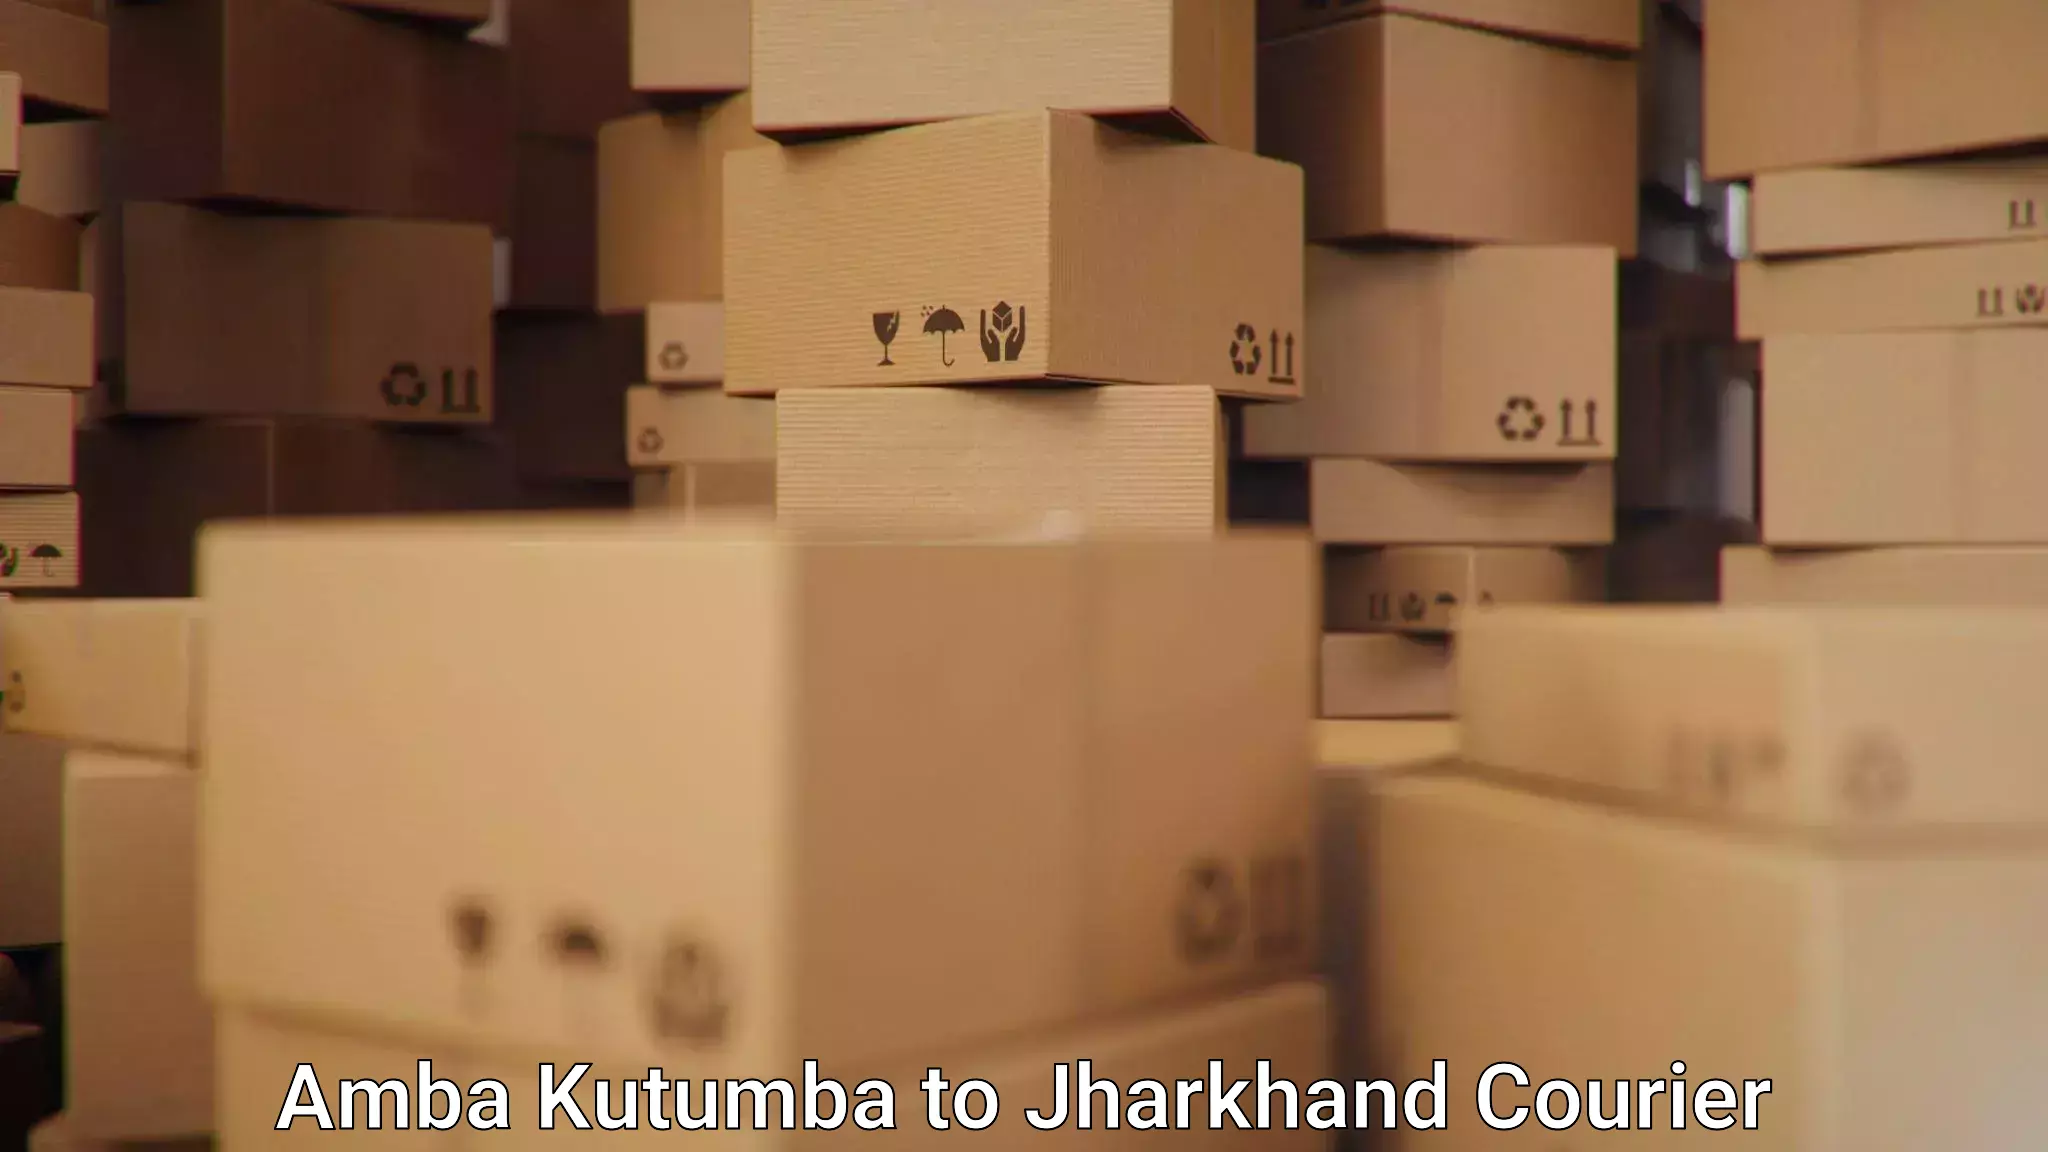 Courier membership in Amba Kutumba to Bero Ranchi